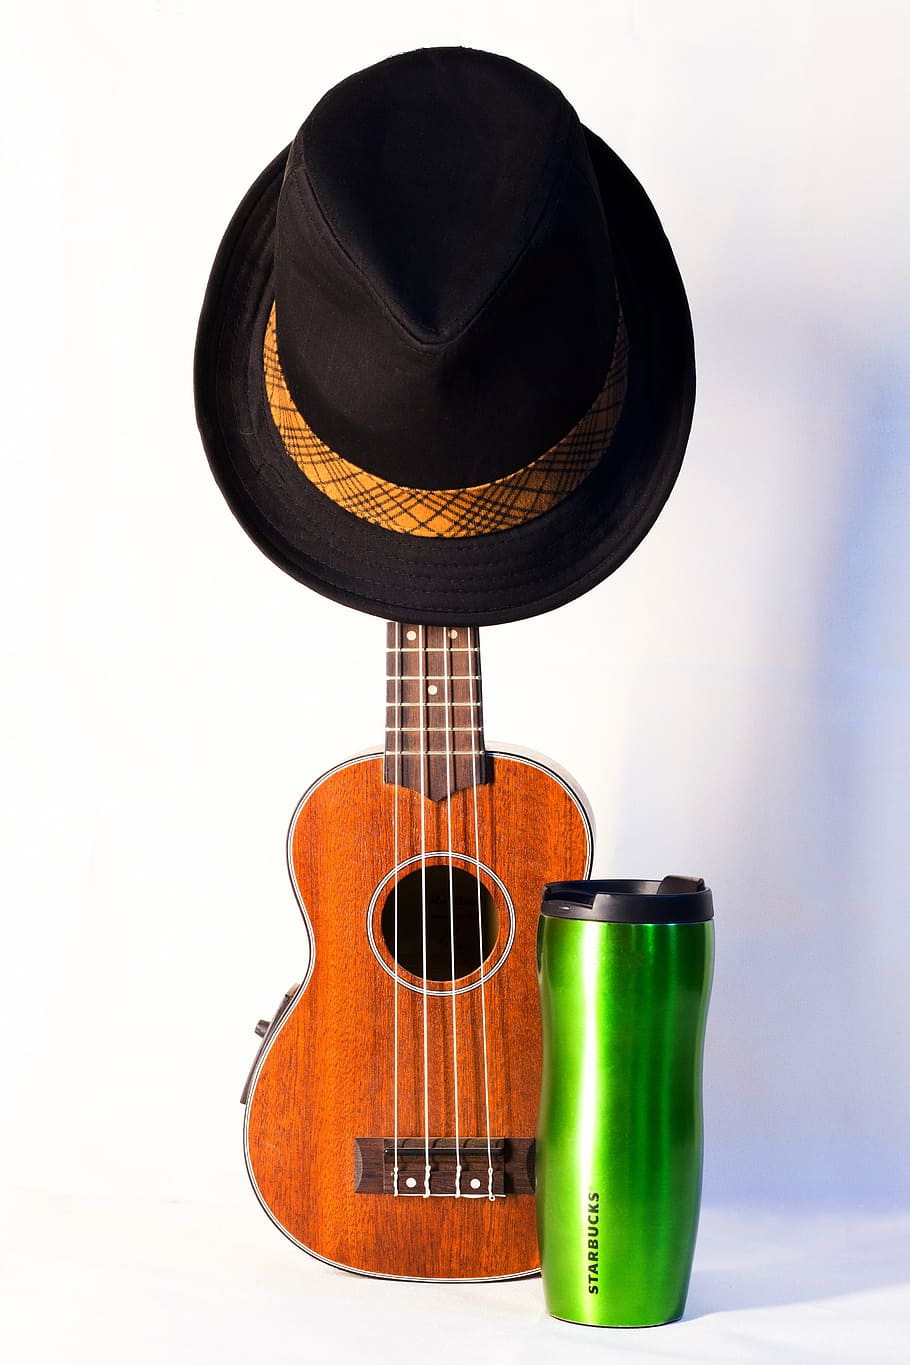 music, ukulele, hat, coffee, old, creativity, musical instrument, string instrument, still life, white background